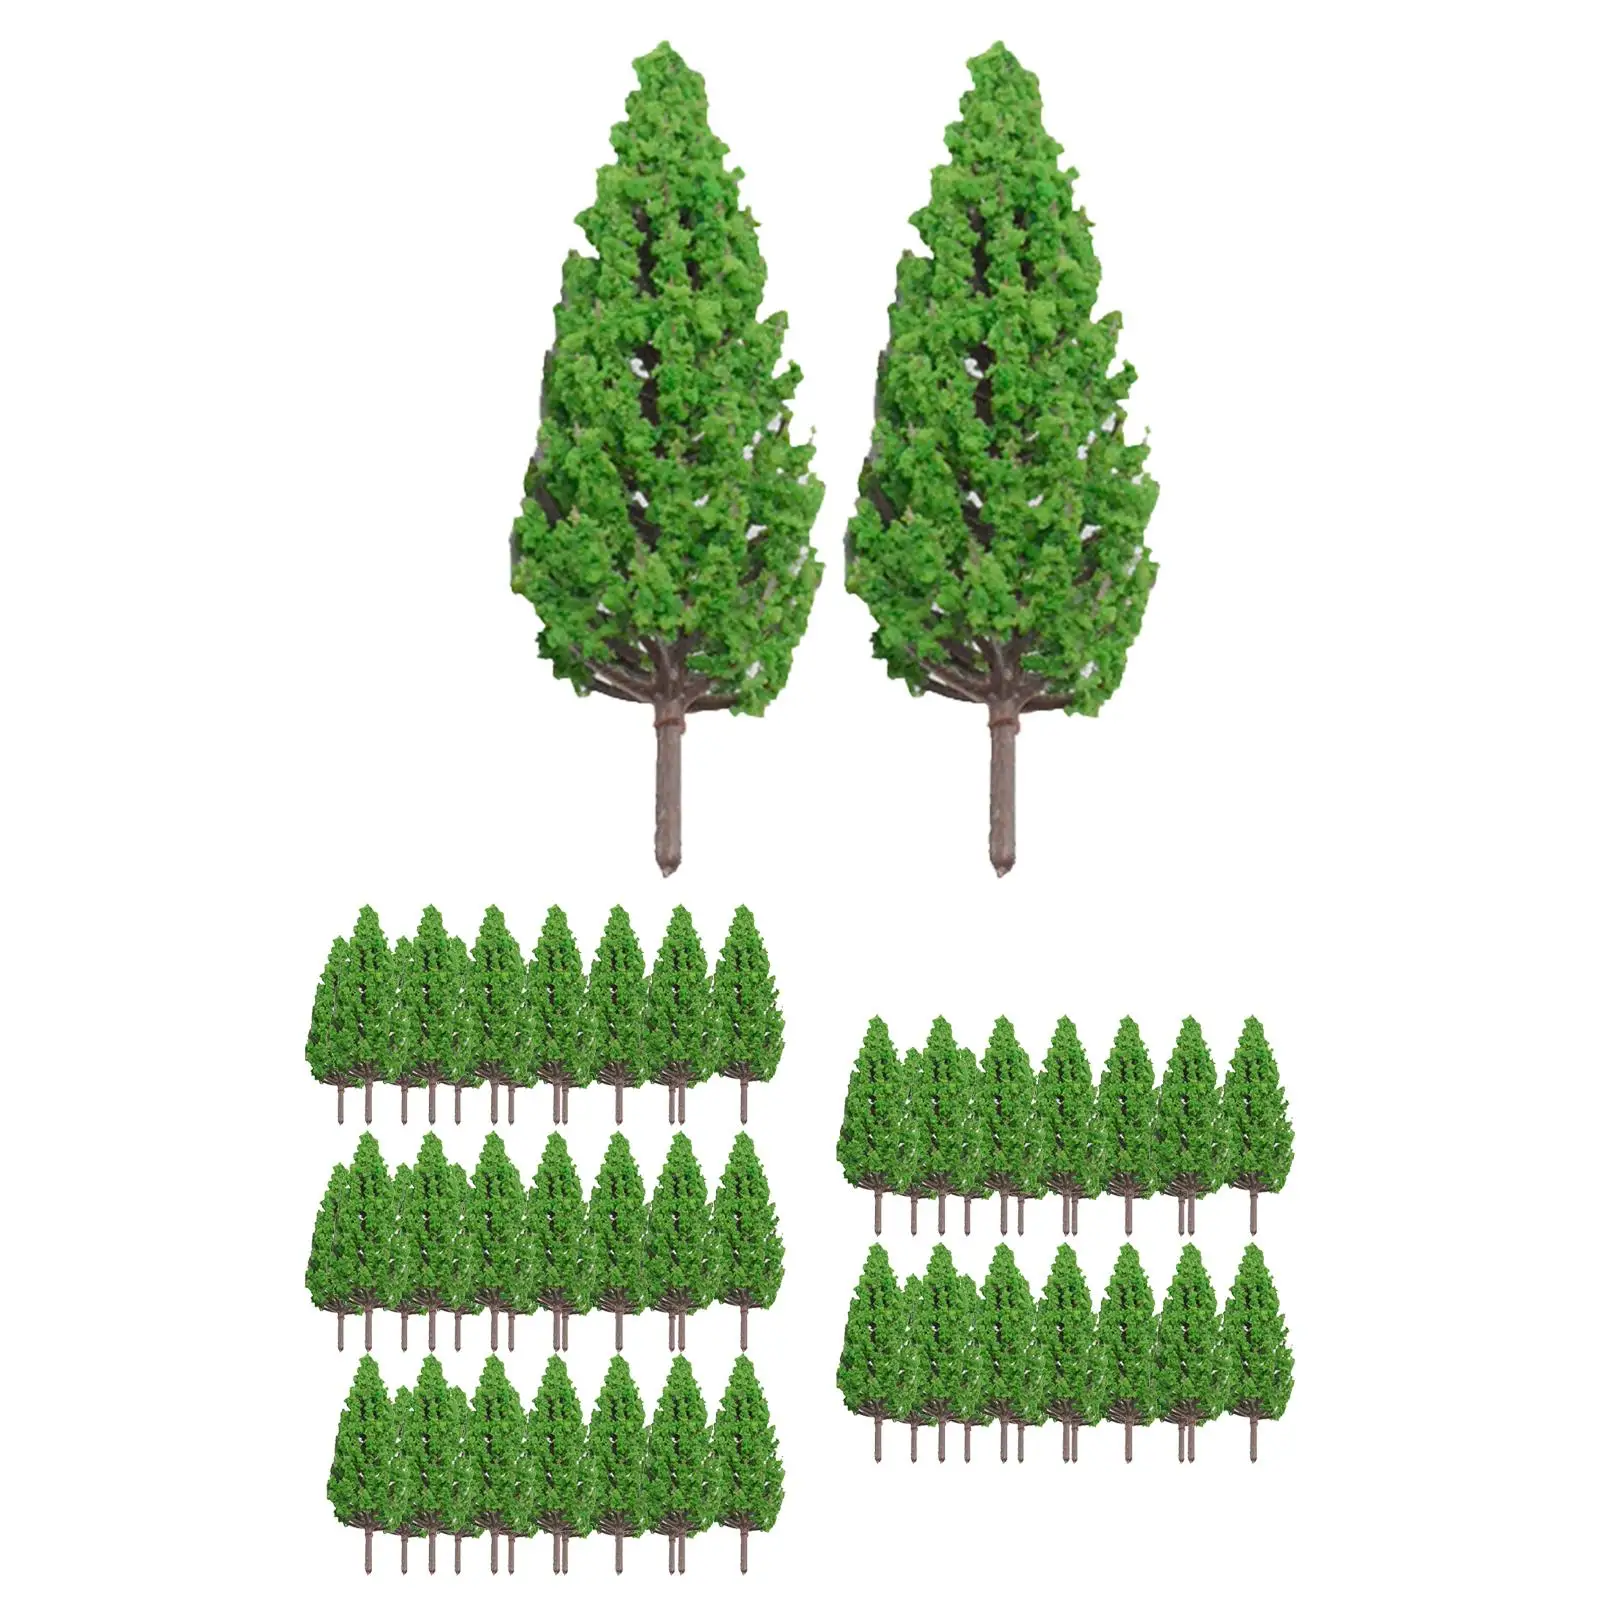 70x Mini Landscape Tree Model Trees for Building Model Diorama Layout Landscape Layout Miniature Scenery Fairy Garden Decor